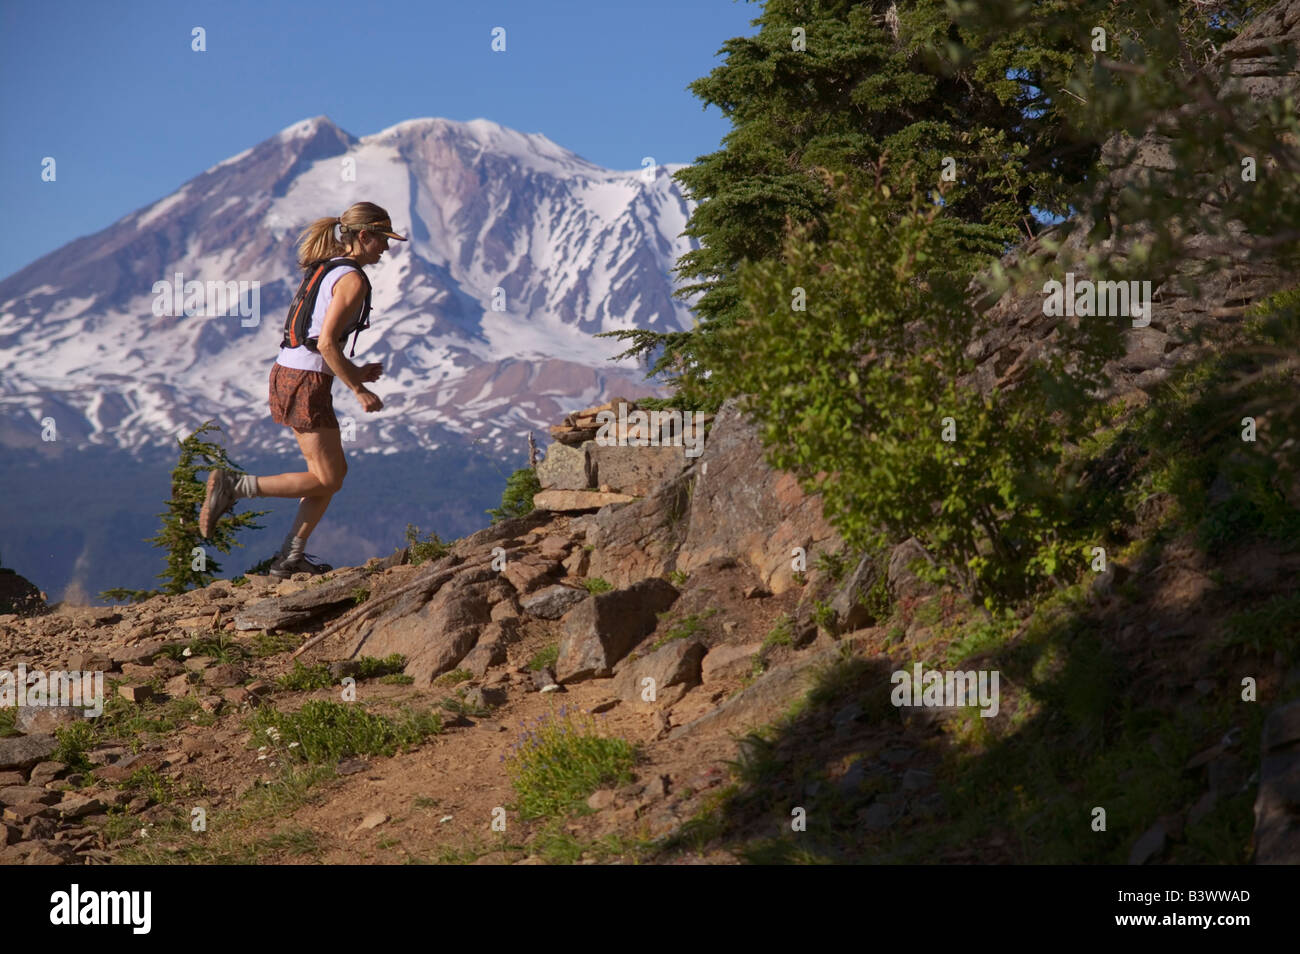 Side profile of a woman running on a mountain, Mt Adams, Washington State, USA Stock Photo